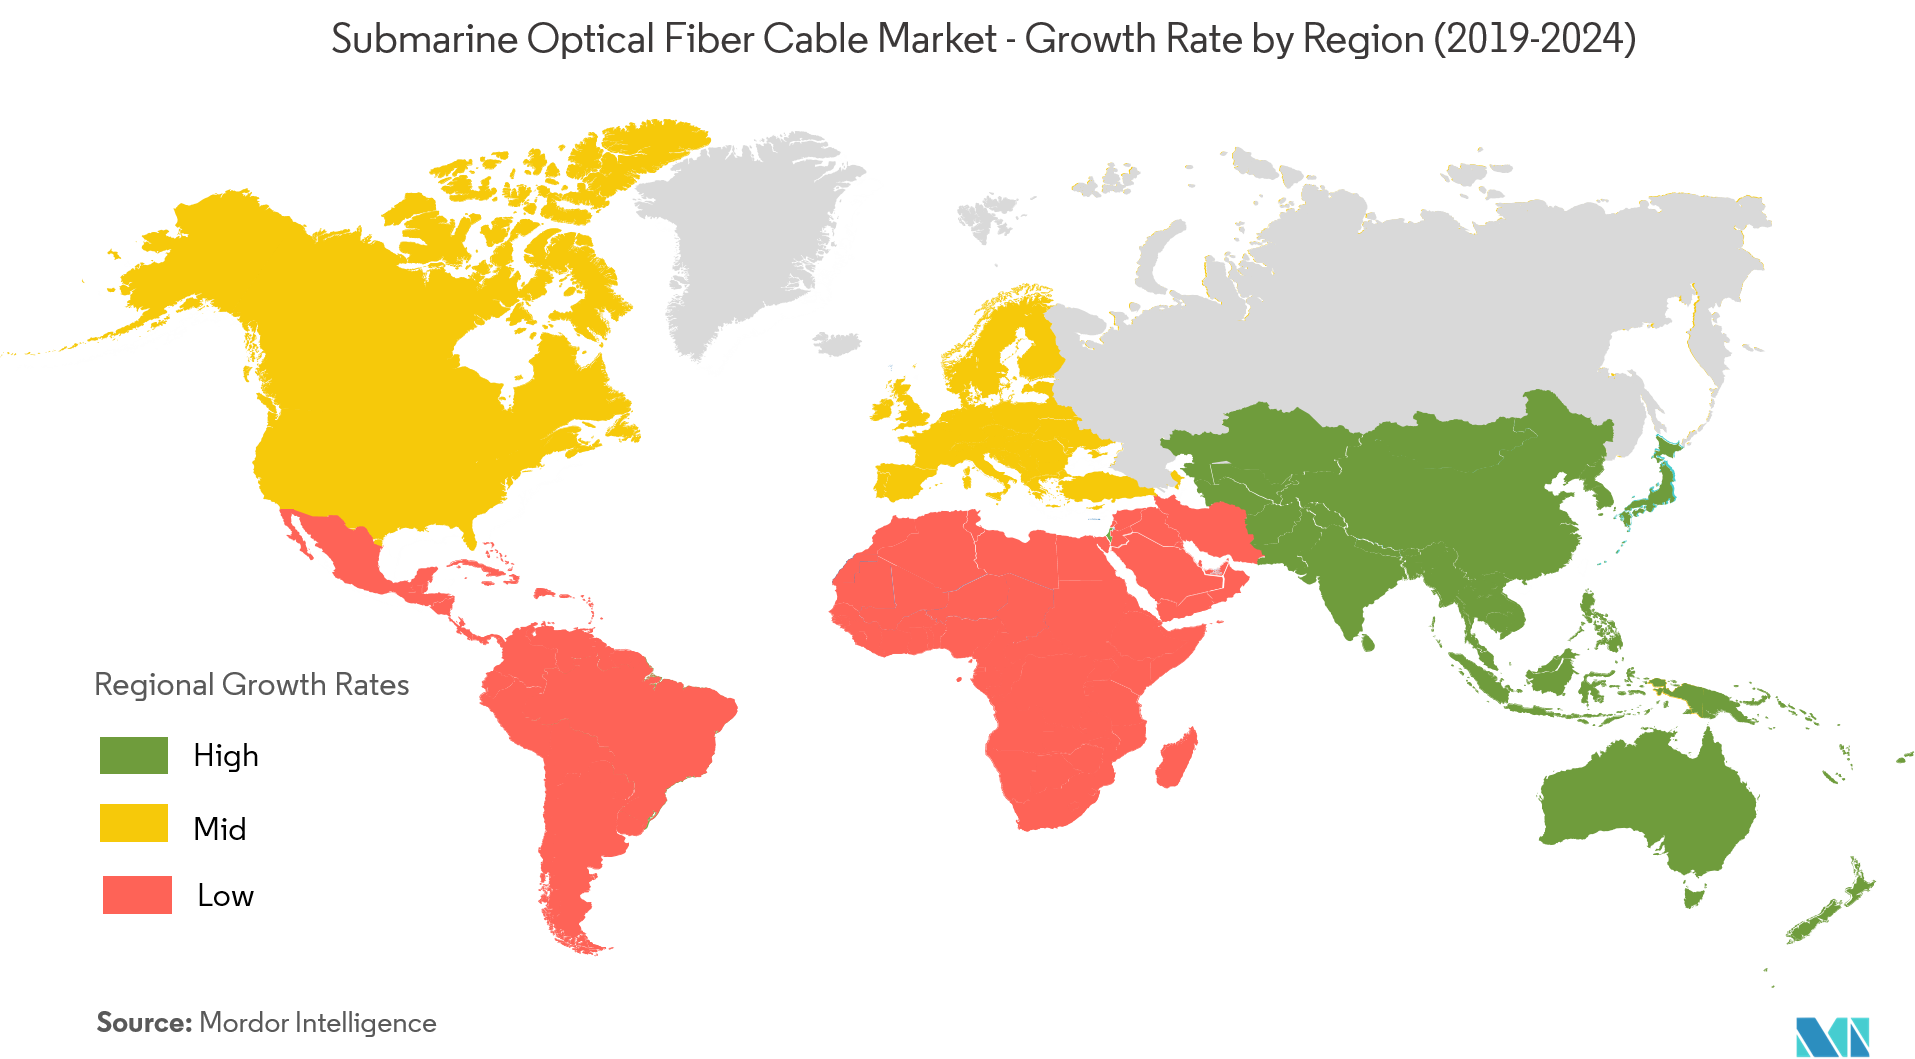 Submarine Optical Fiber Cable Market Growth